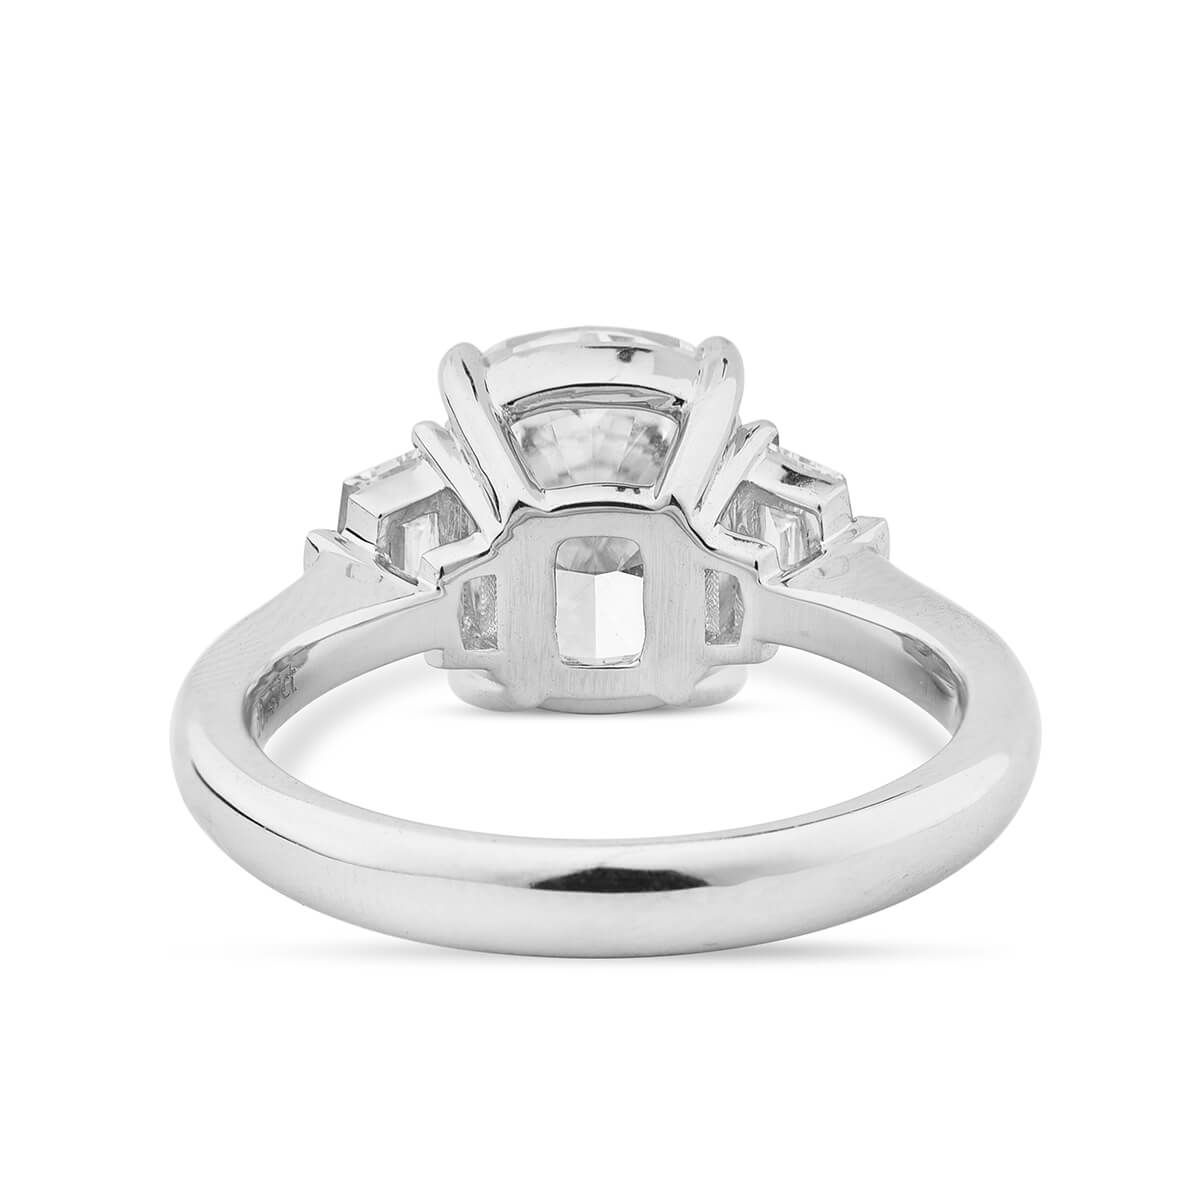  White Diamond Ring, 3.20 Ct. (3.67 Ct. TW), Cushion shape, GIA Certified, 5276691665